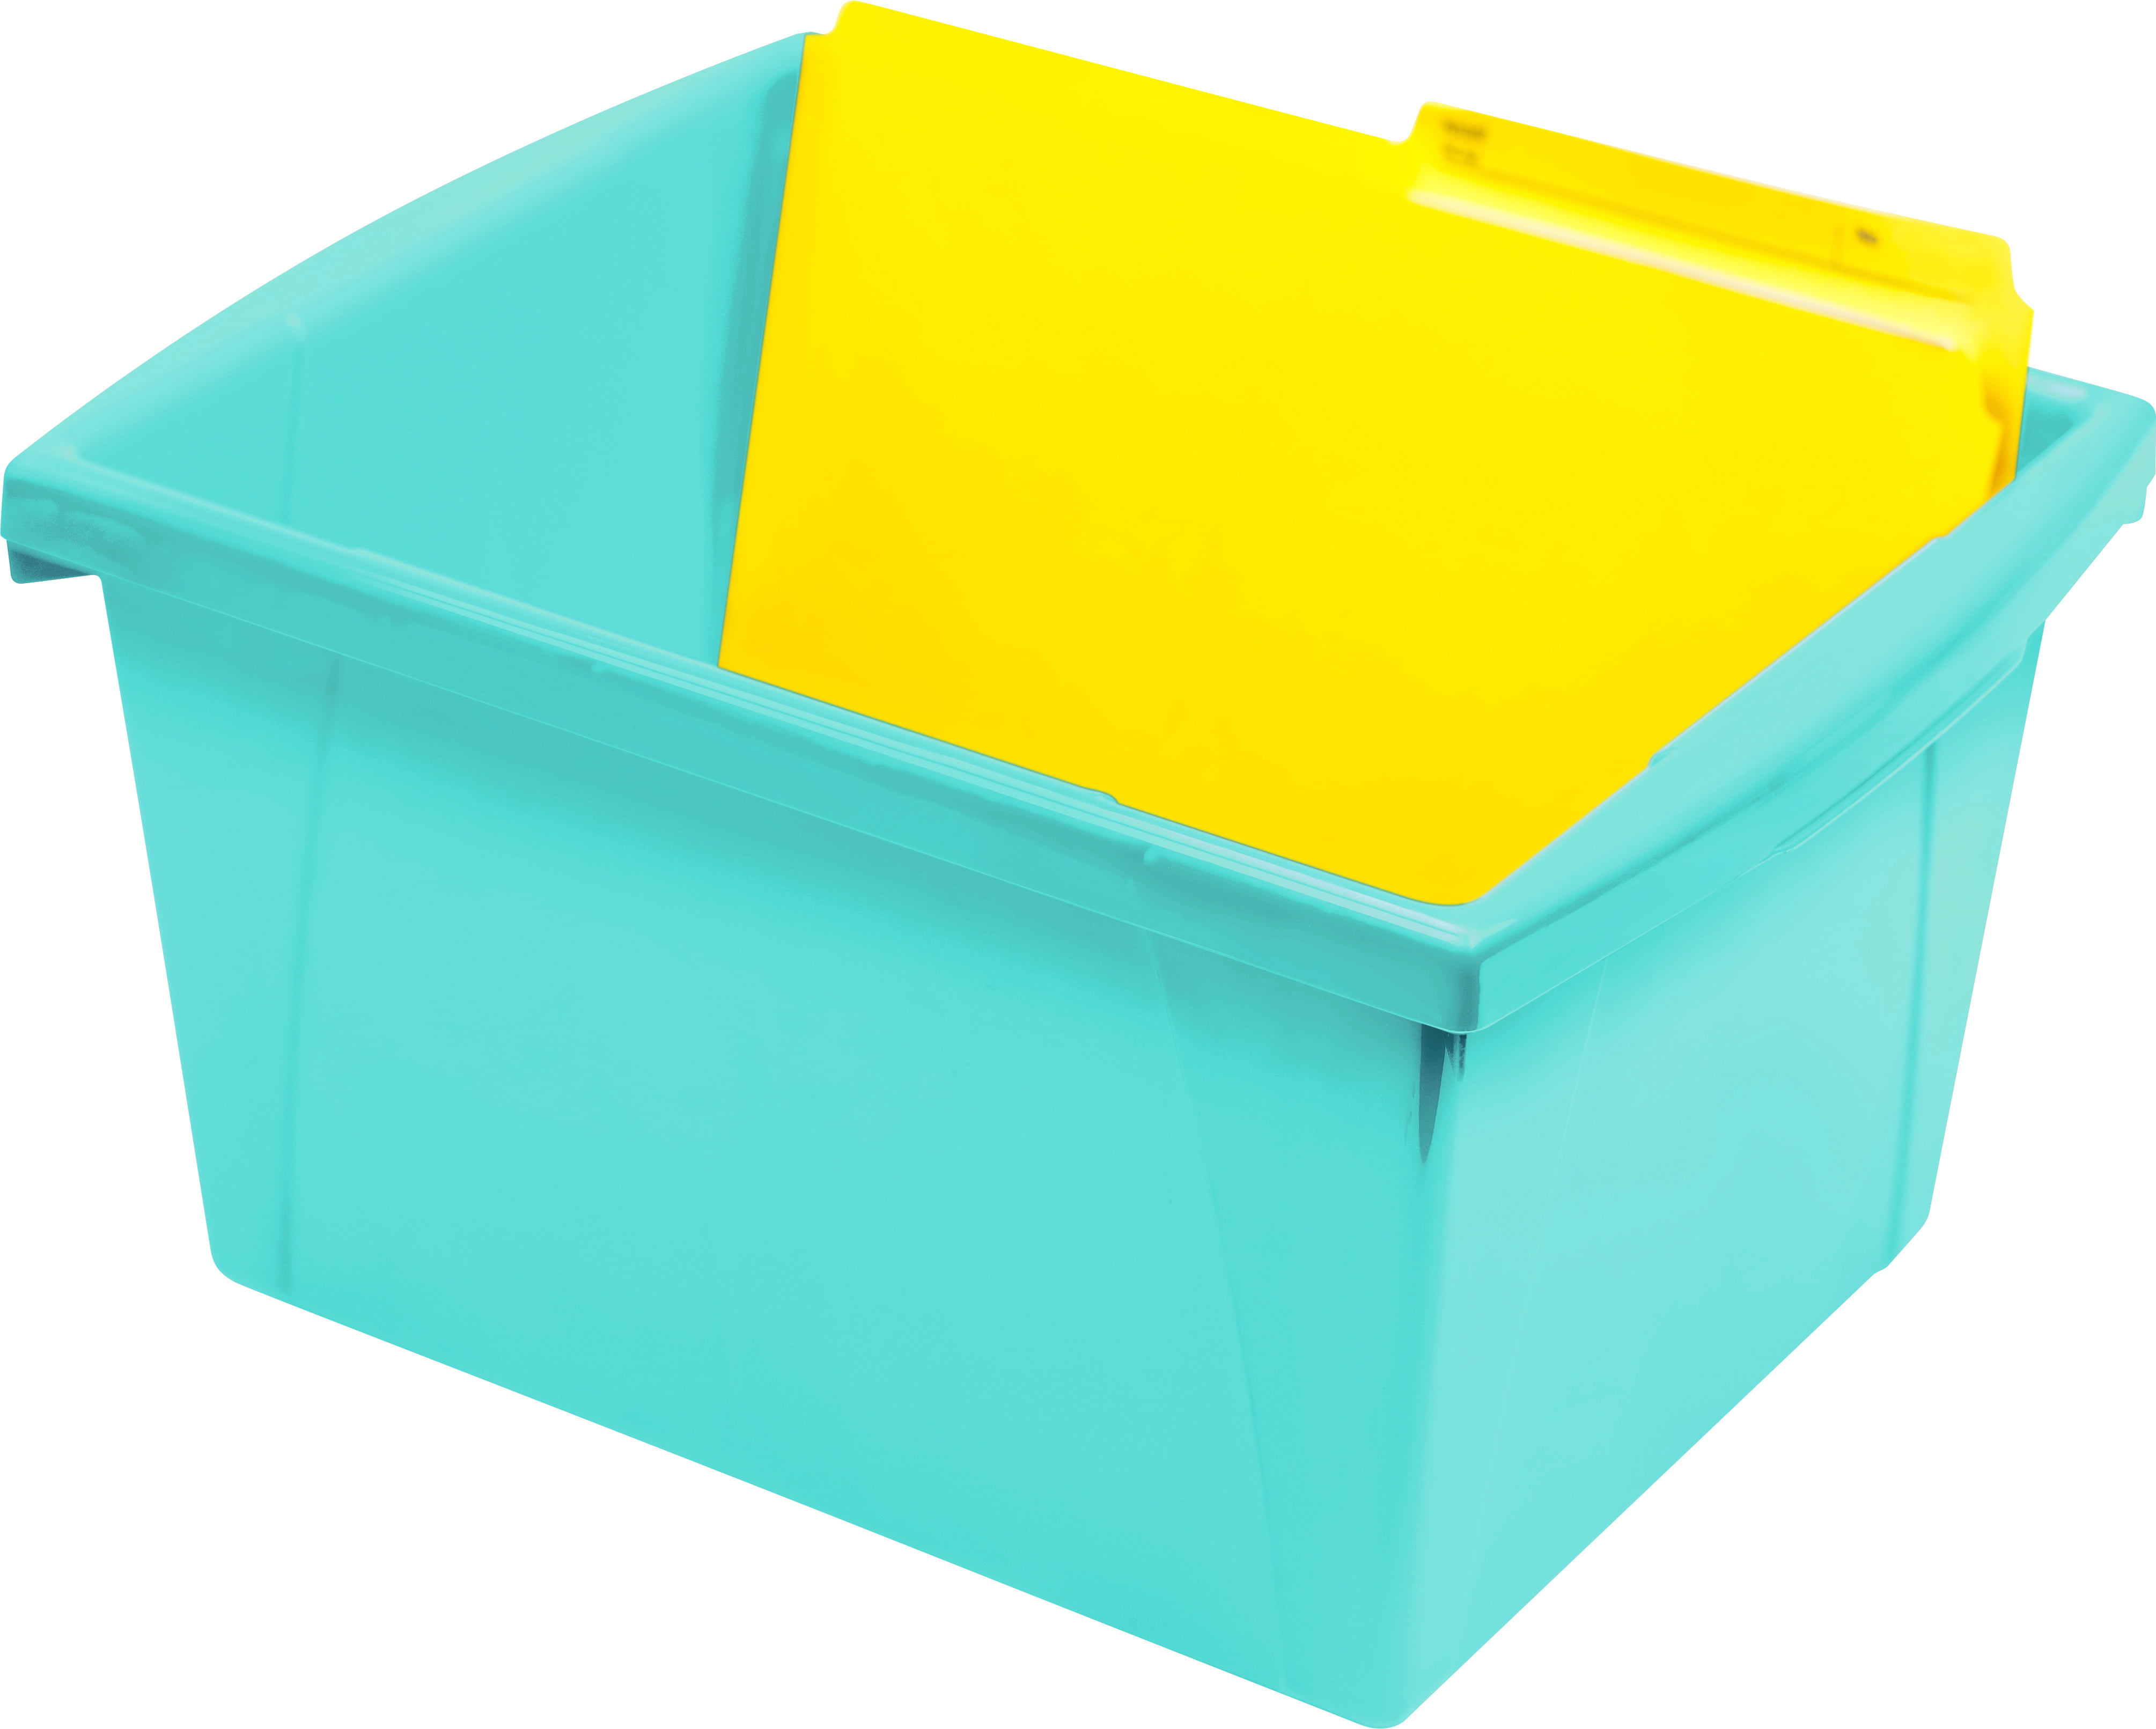  Storex 4 Gallon Storage Bin with Lid – Plastic